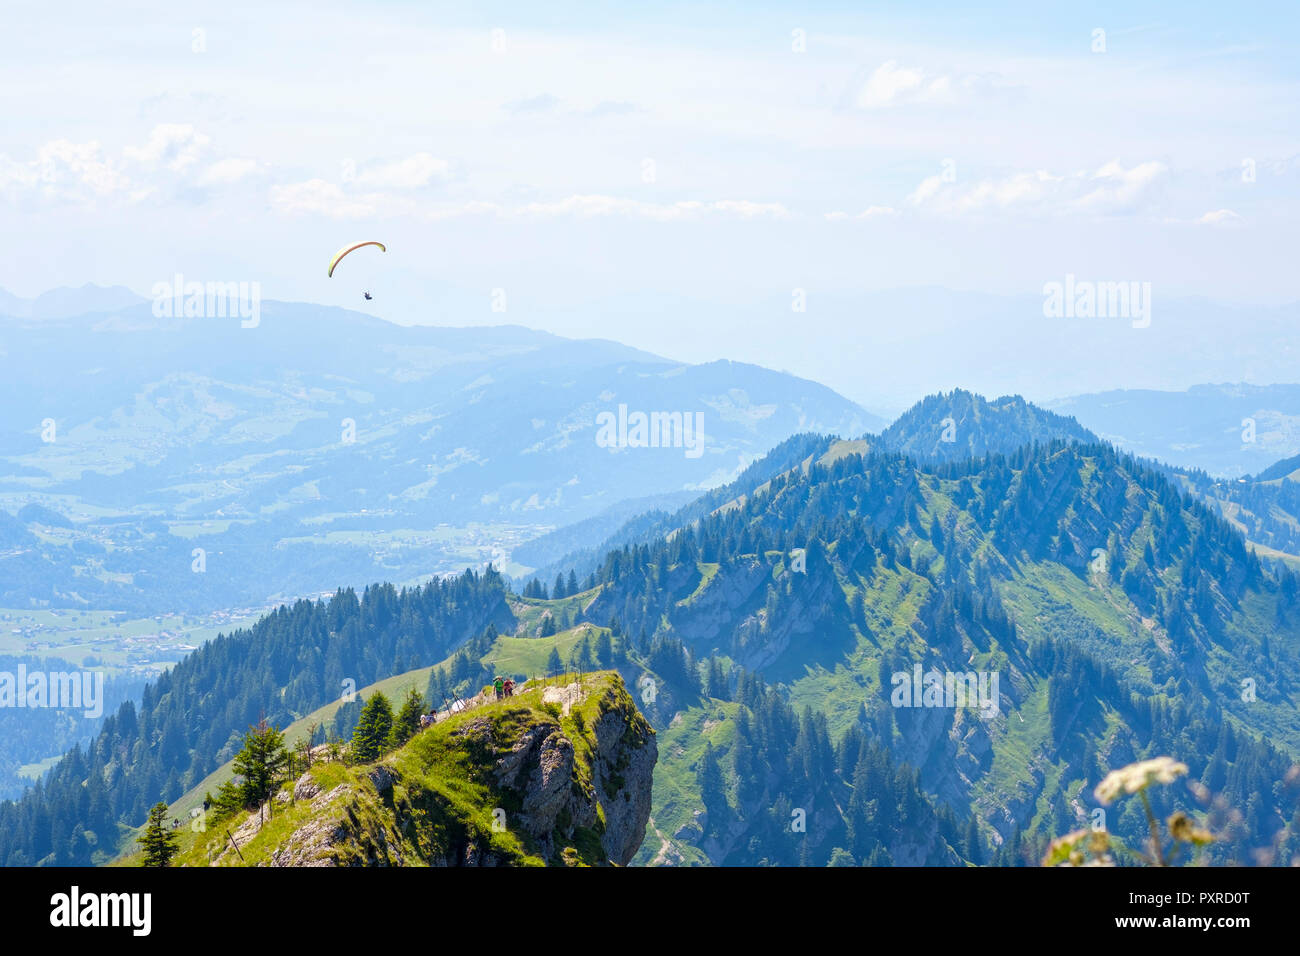 Germany, Bavaria, Allgaeu, Oberallgaeu, Oberstaufen, Allgaeu Alps, View from Hochgrat, Nagelfluhkette, paraglider Stock Photo